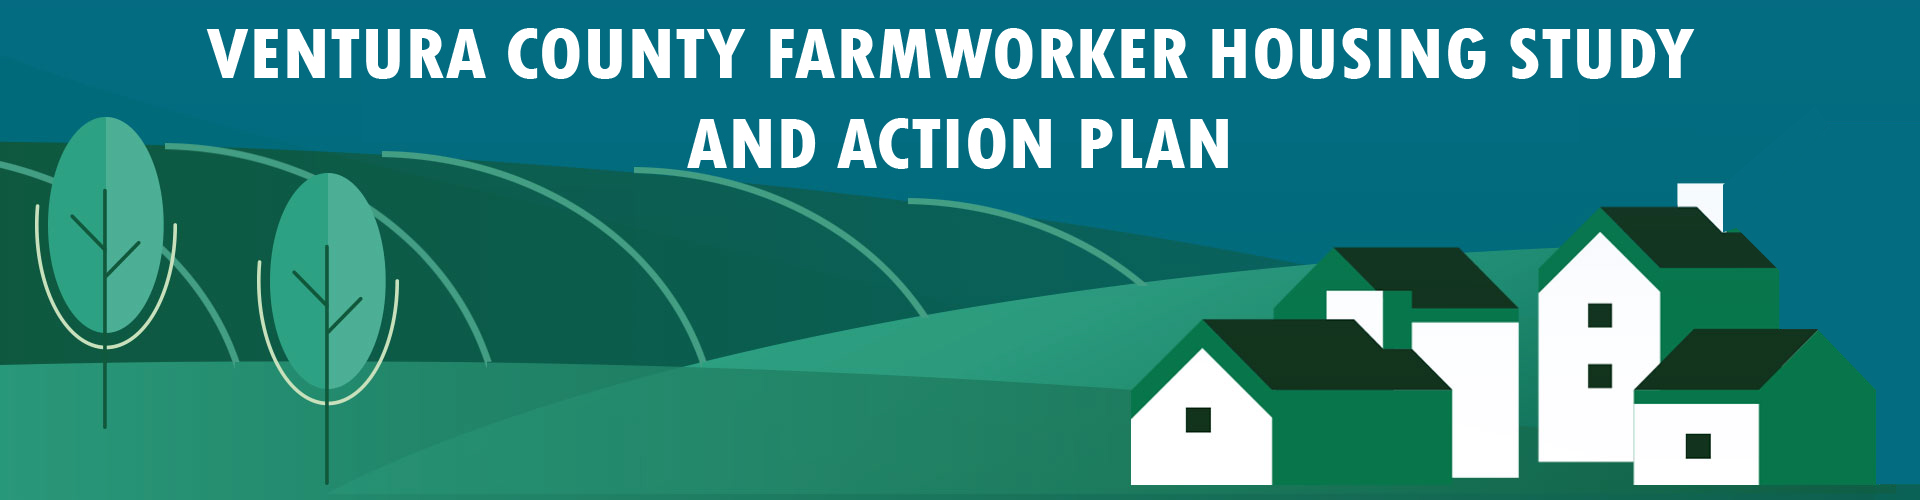 farmworker study banner